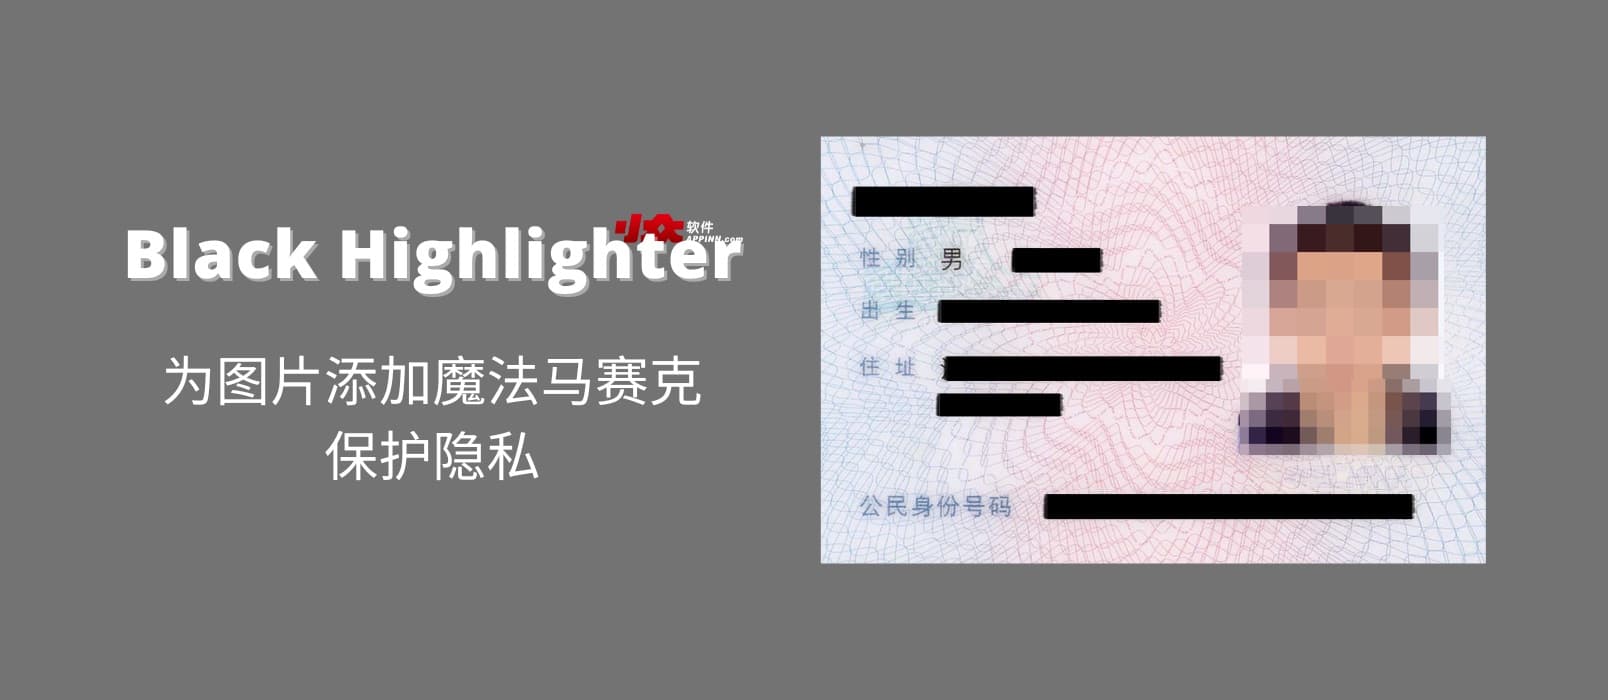 Black Highlighter - 为图片上的私密内容打码（漂亮、均匀、完整），保护隐私[macOS/iOS] 1